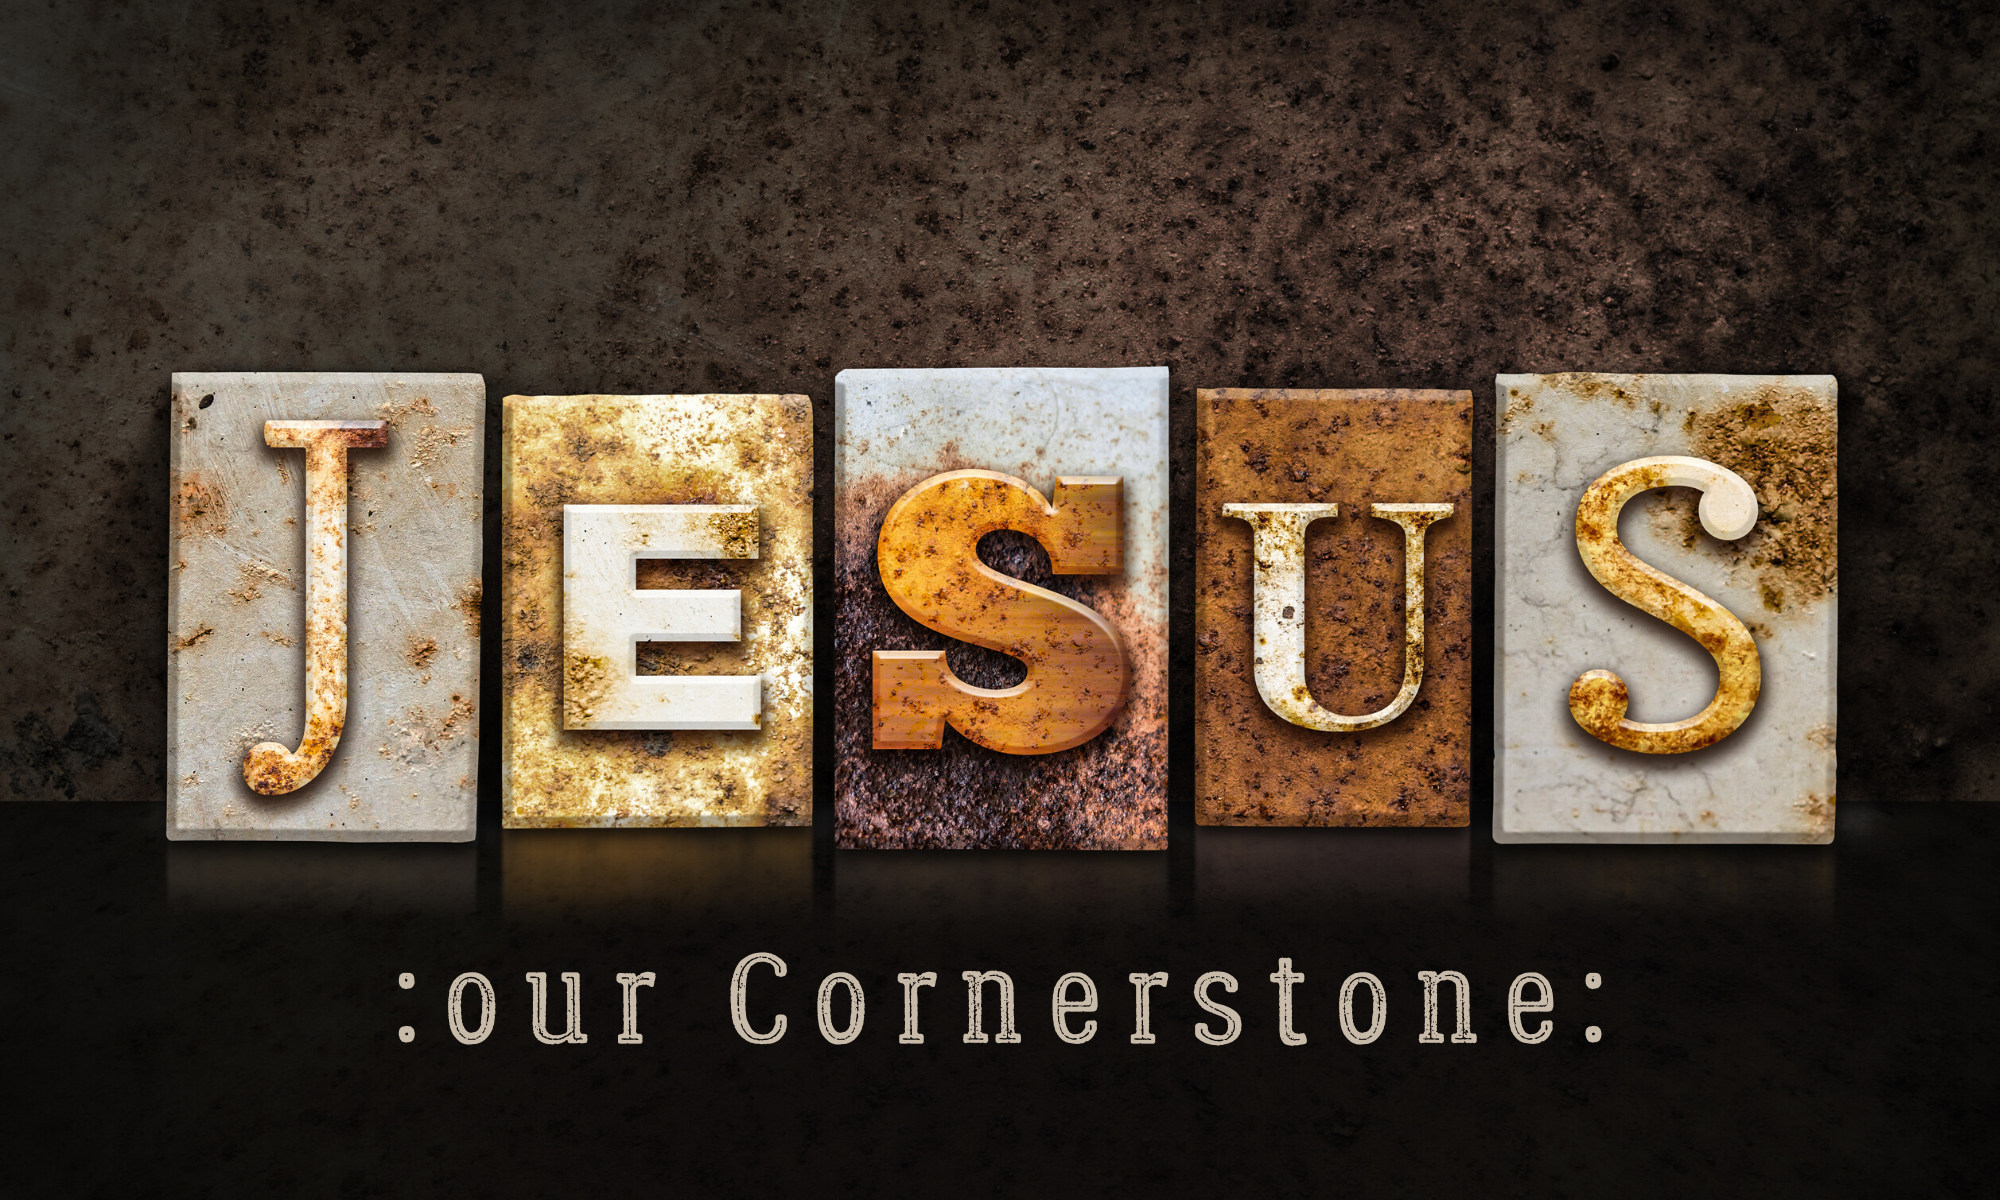 Is Jesus YOUR Cornerstone?